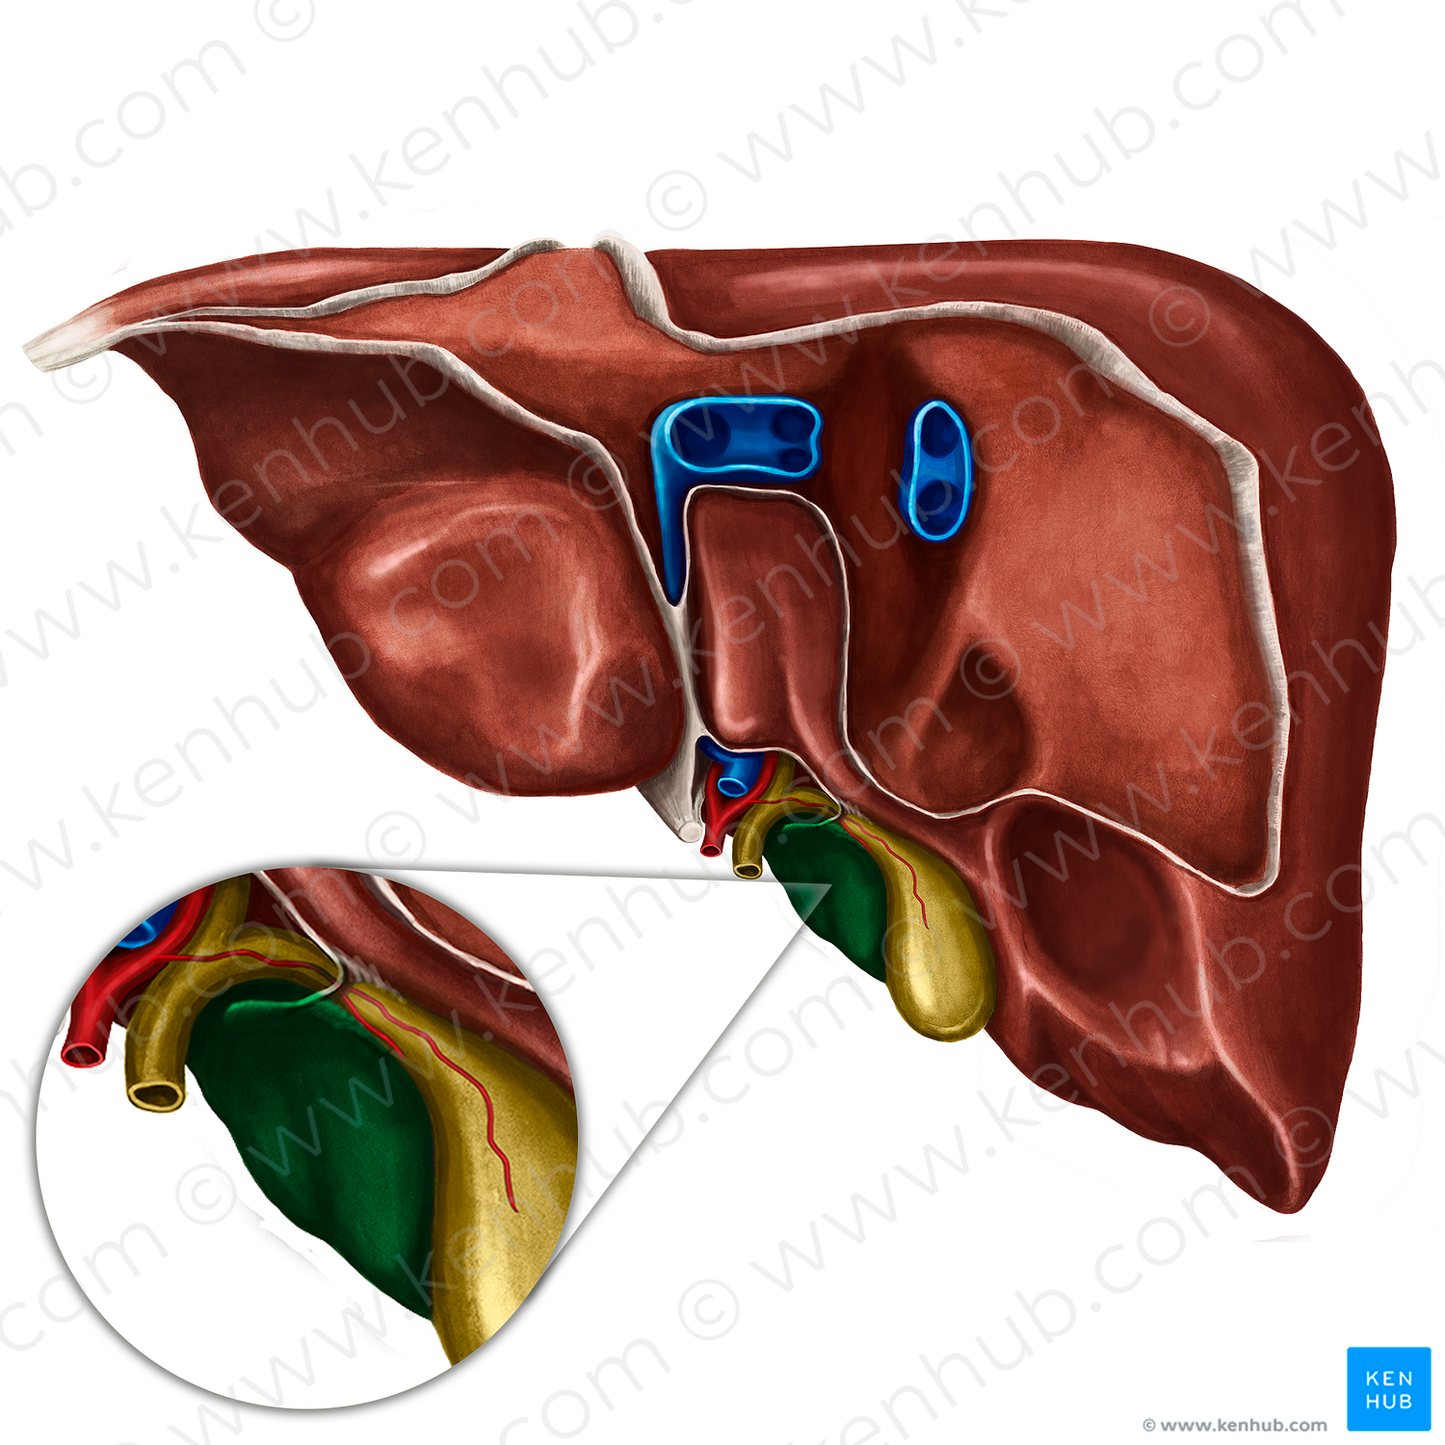 Quadrate lobe of liver (#4858)